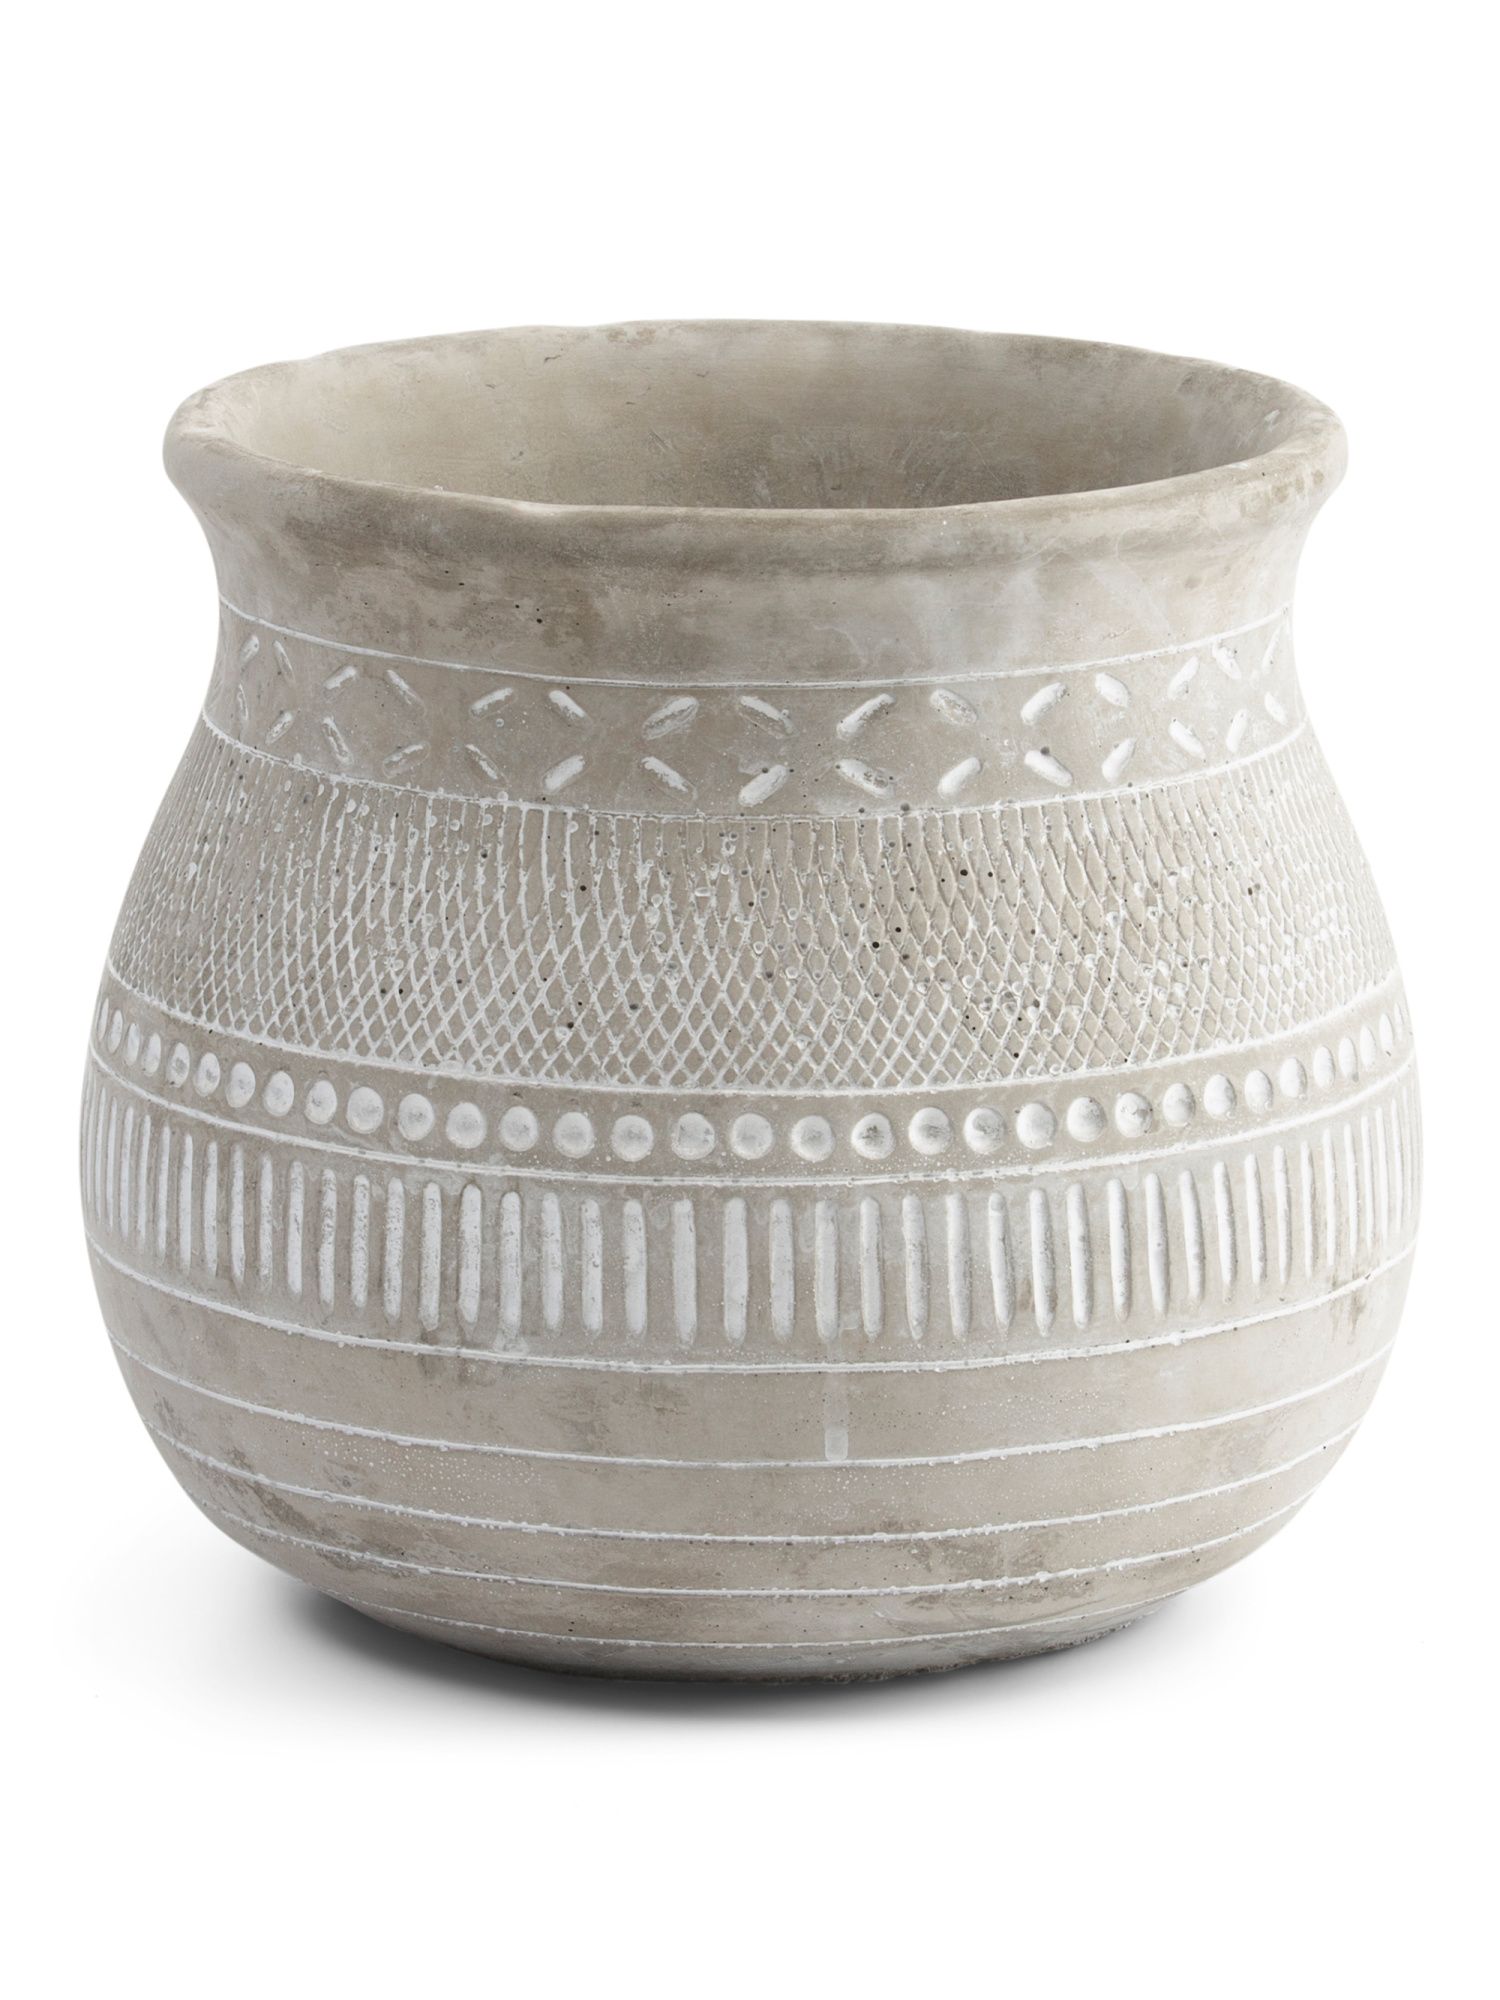 Tribal Ceramic Planter | TJ Maxx